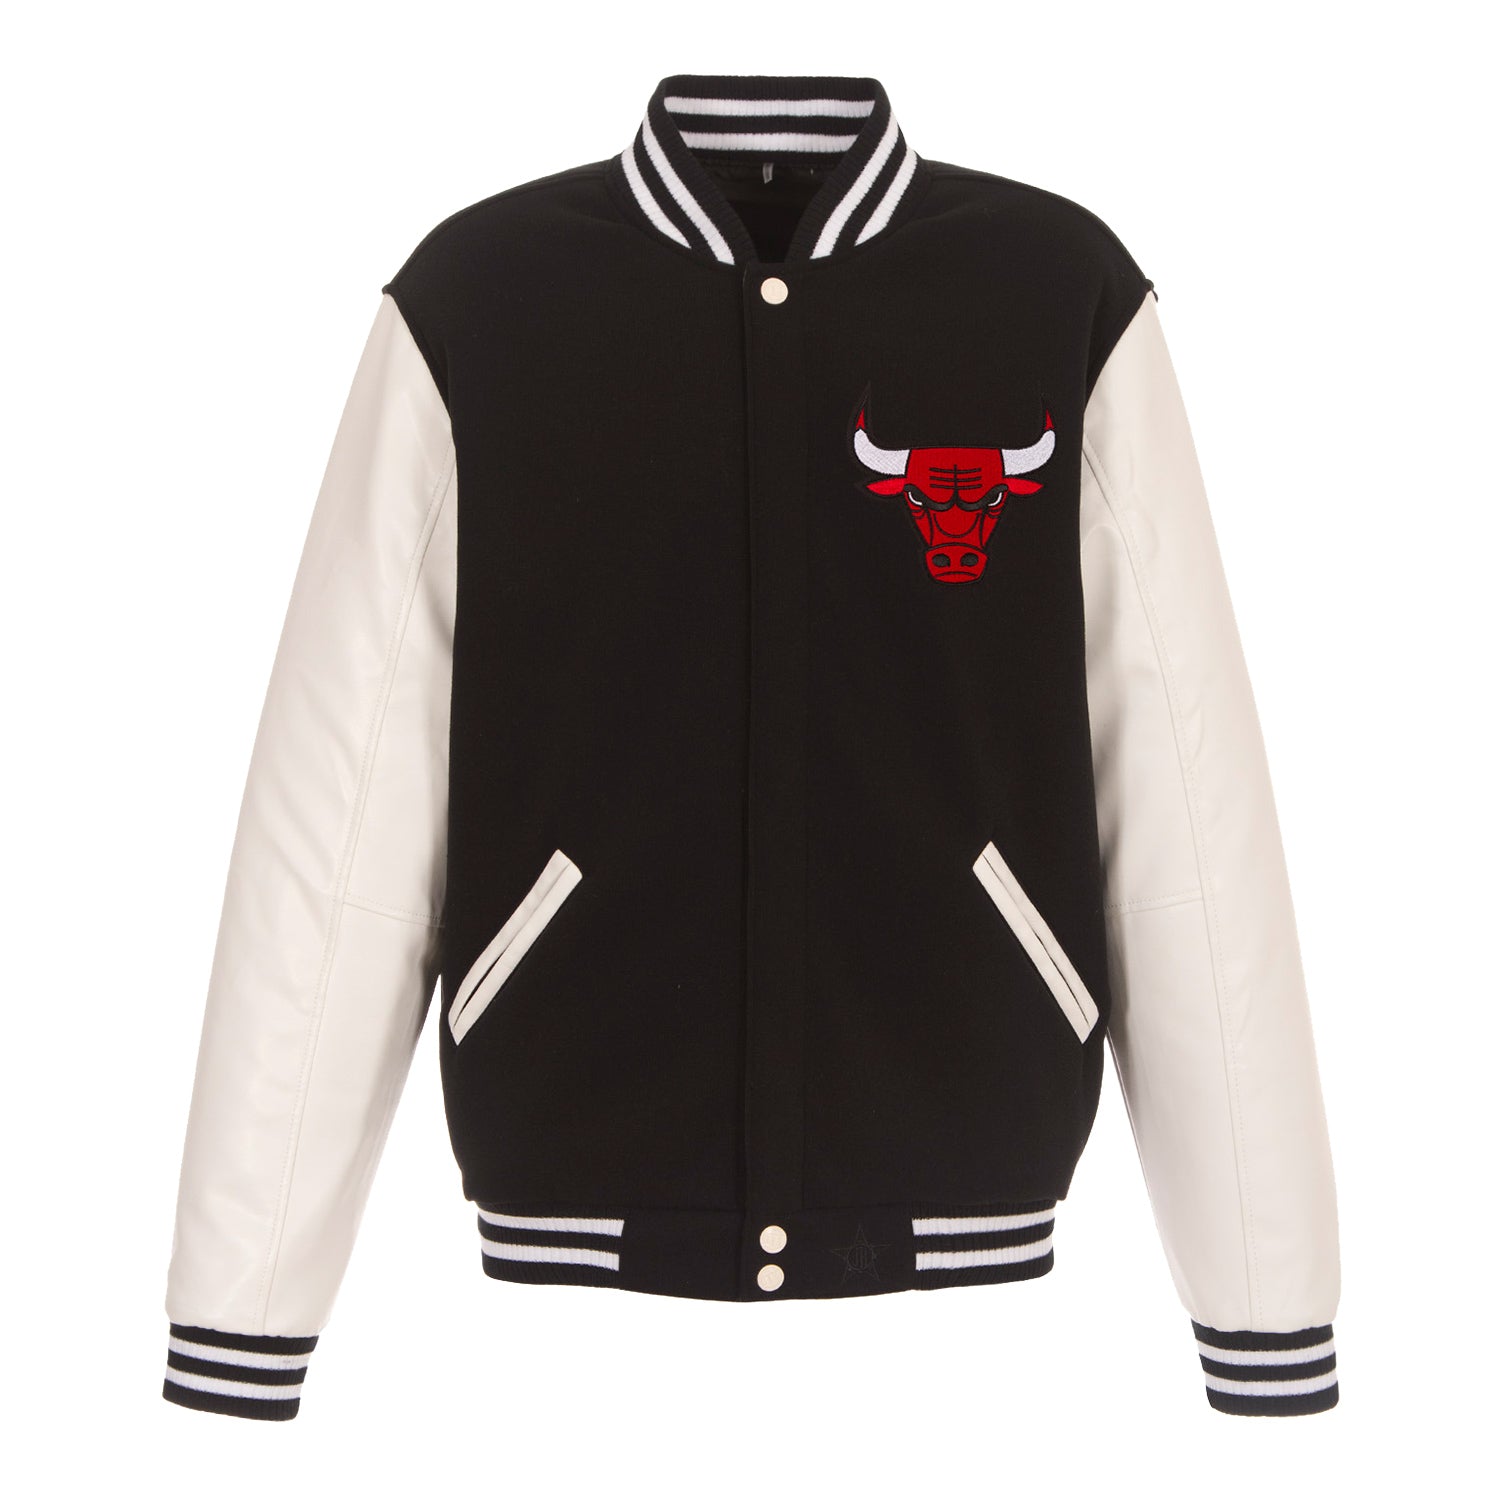 Off-White Chicago Bulls Varsity Jacket Tee Release Info